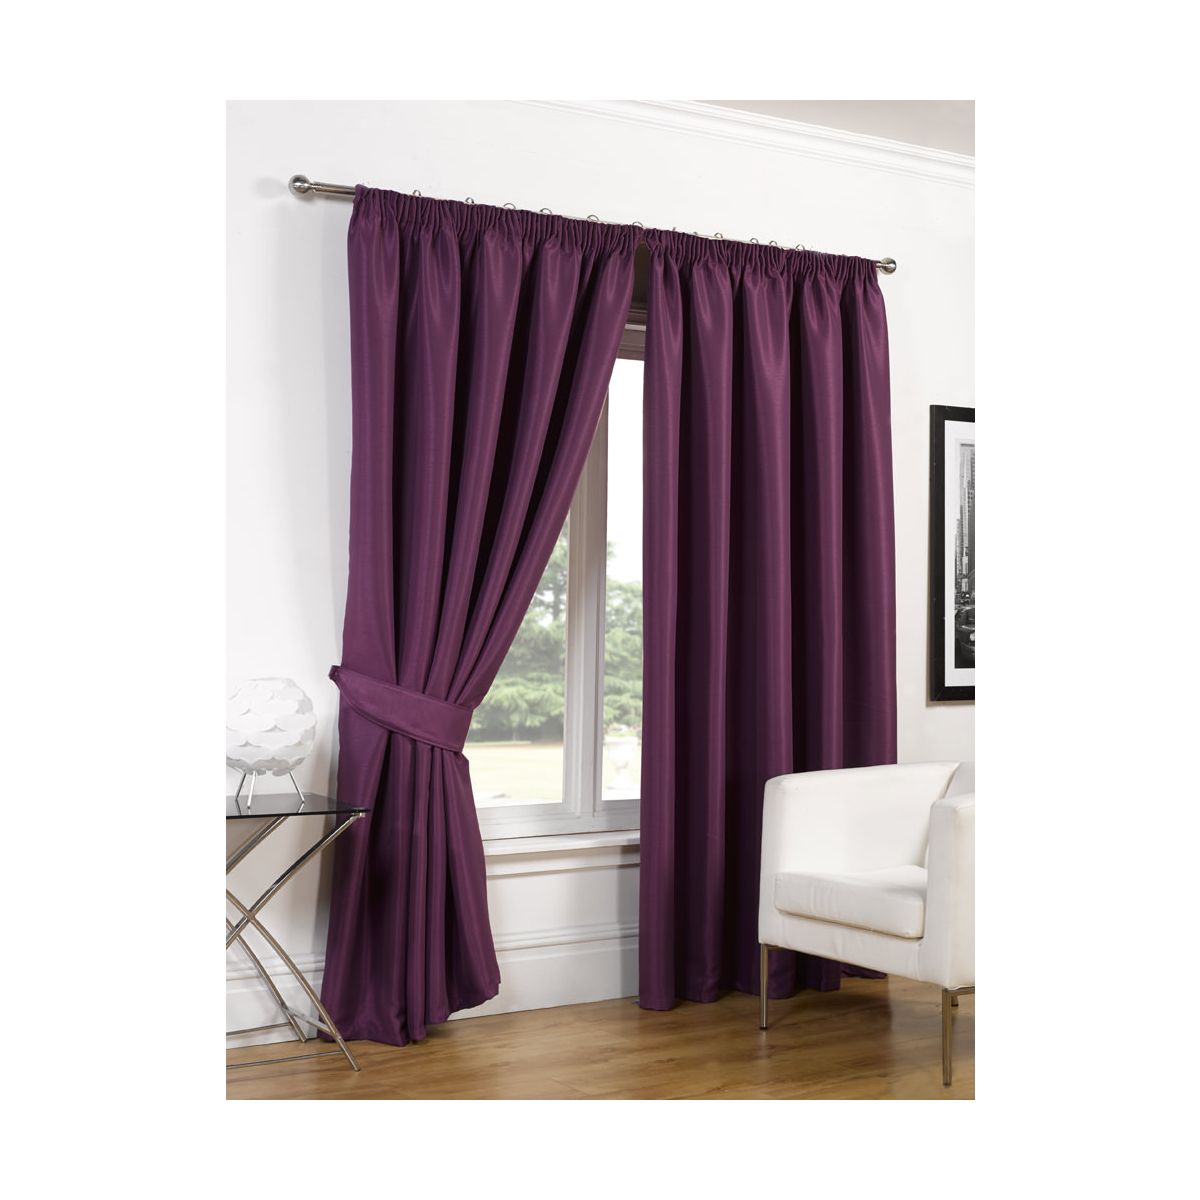 Luxury Faux Silk Blackout Curtains Including Tiebacks - Aubergine 46x54